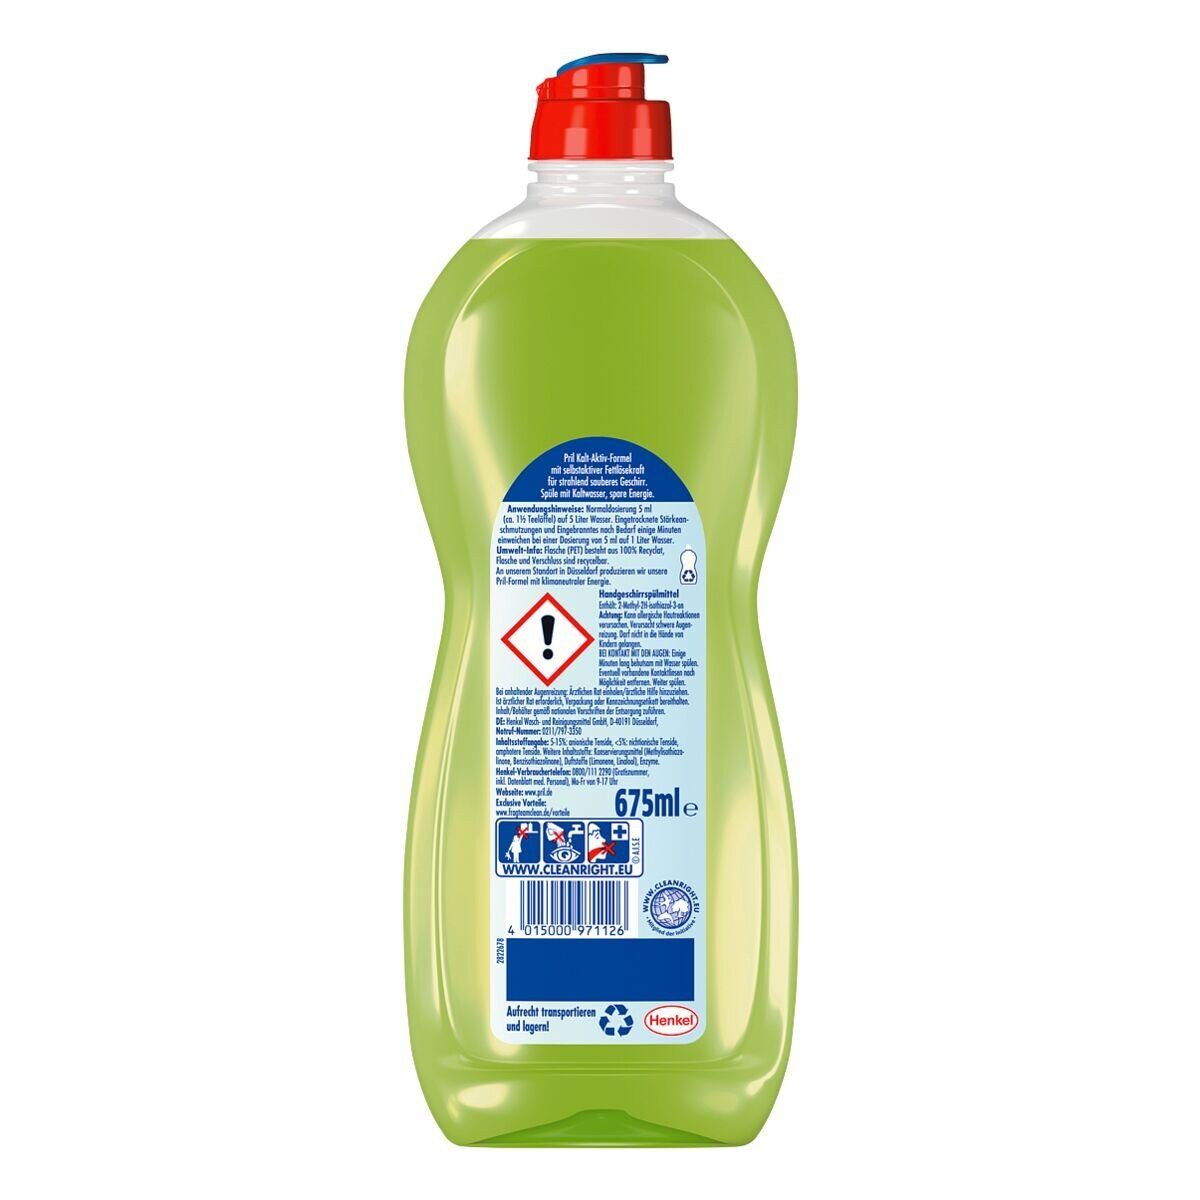 Fettlösekraft) Kalt-Aktiv-Formel höchste ml, Limette Original (675 / PRIL Geschirrspülmittel mit